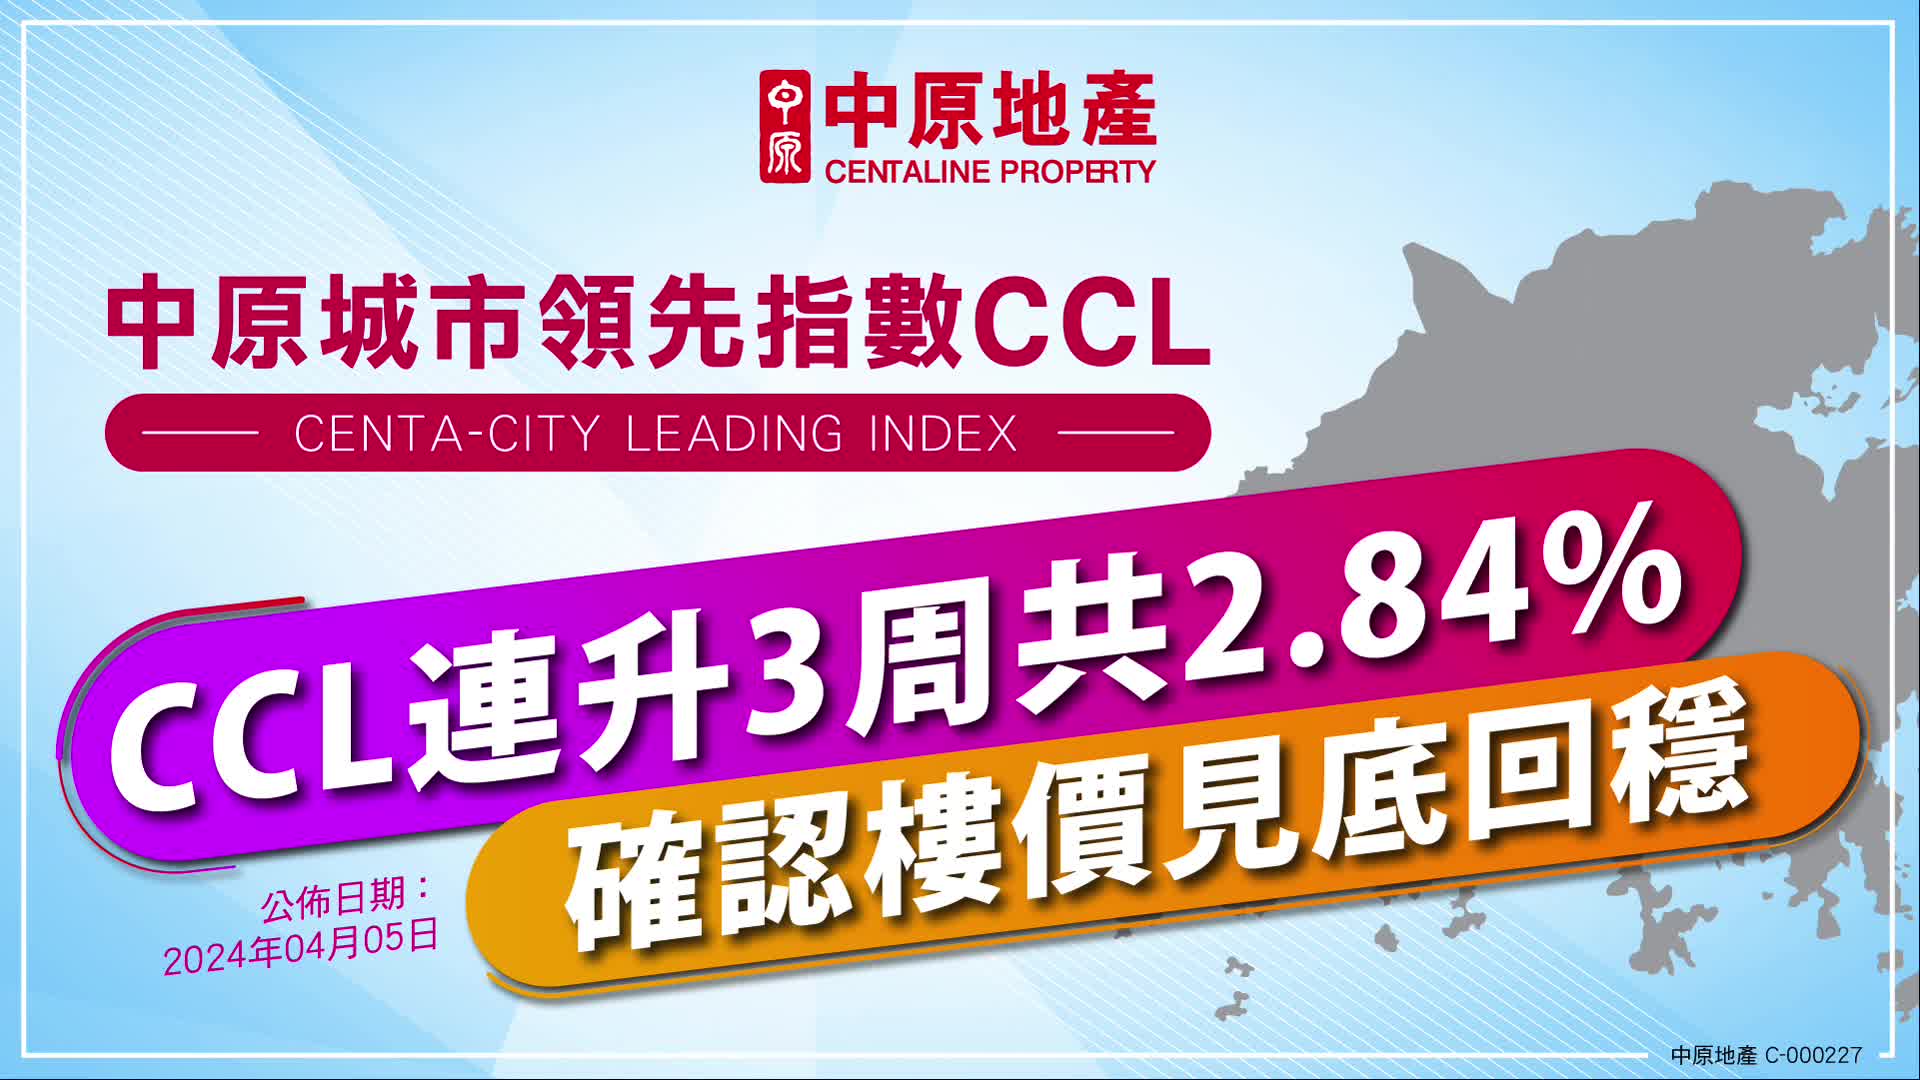 CCL連升3周共2.84%  確認樓價見底回穩